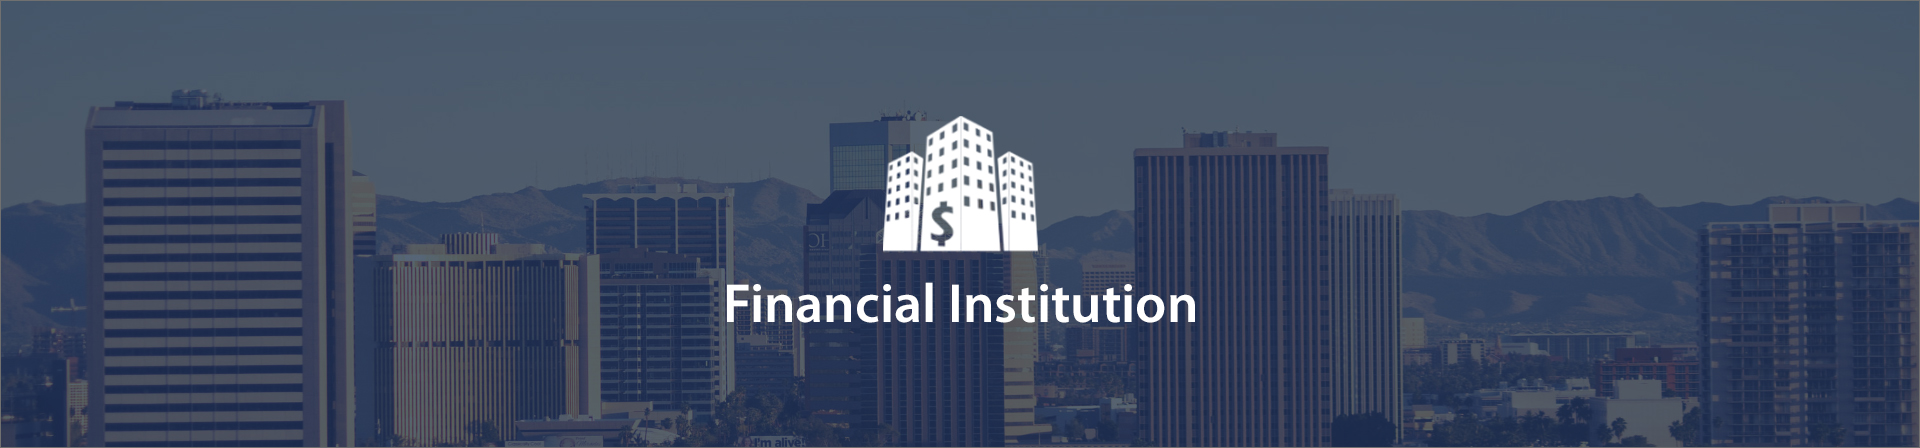 Financial Institution banner